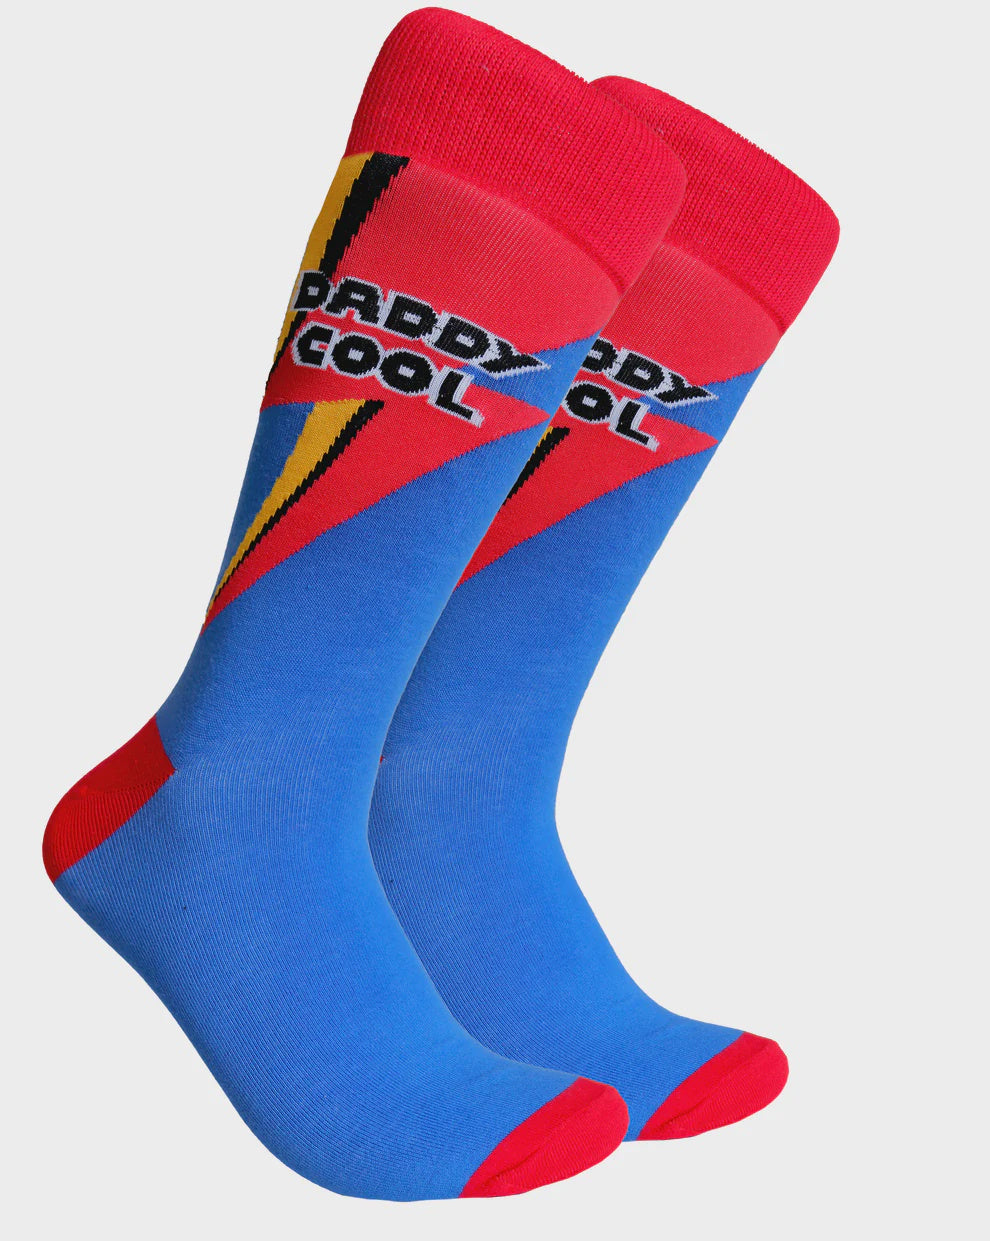 Daddy Cool Socks - Large